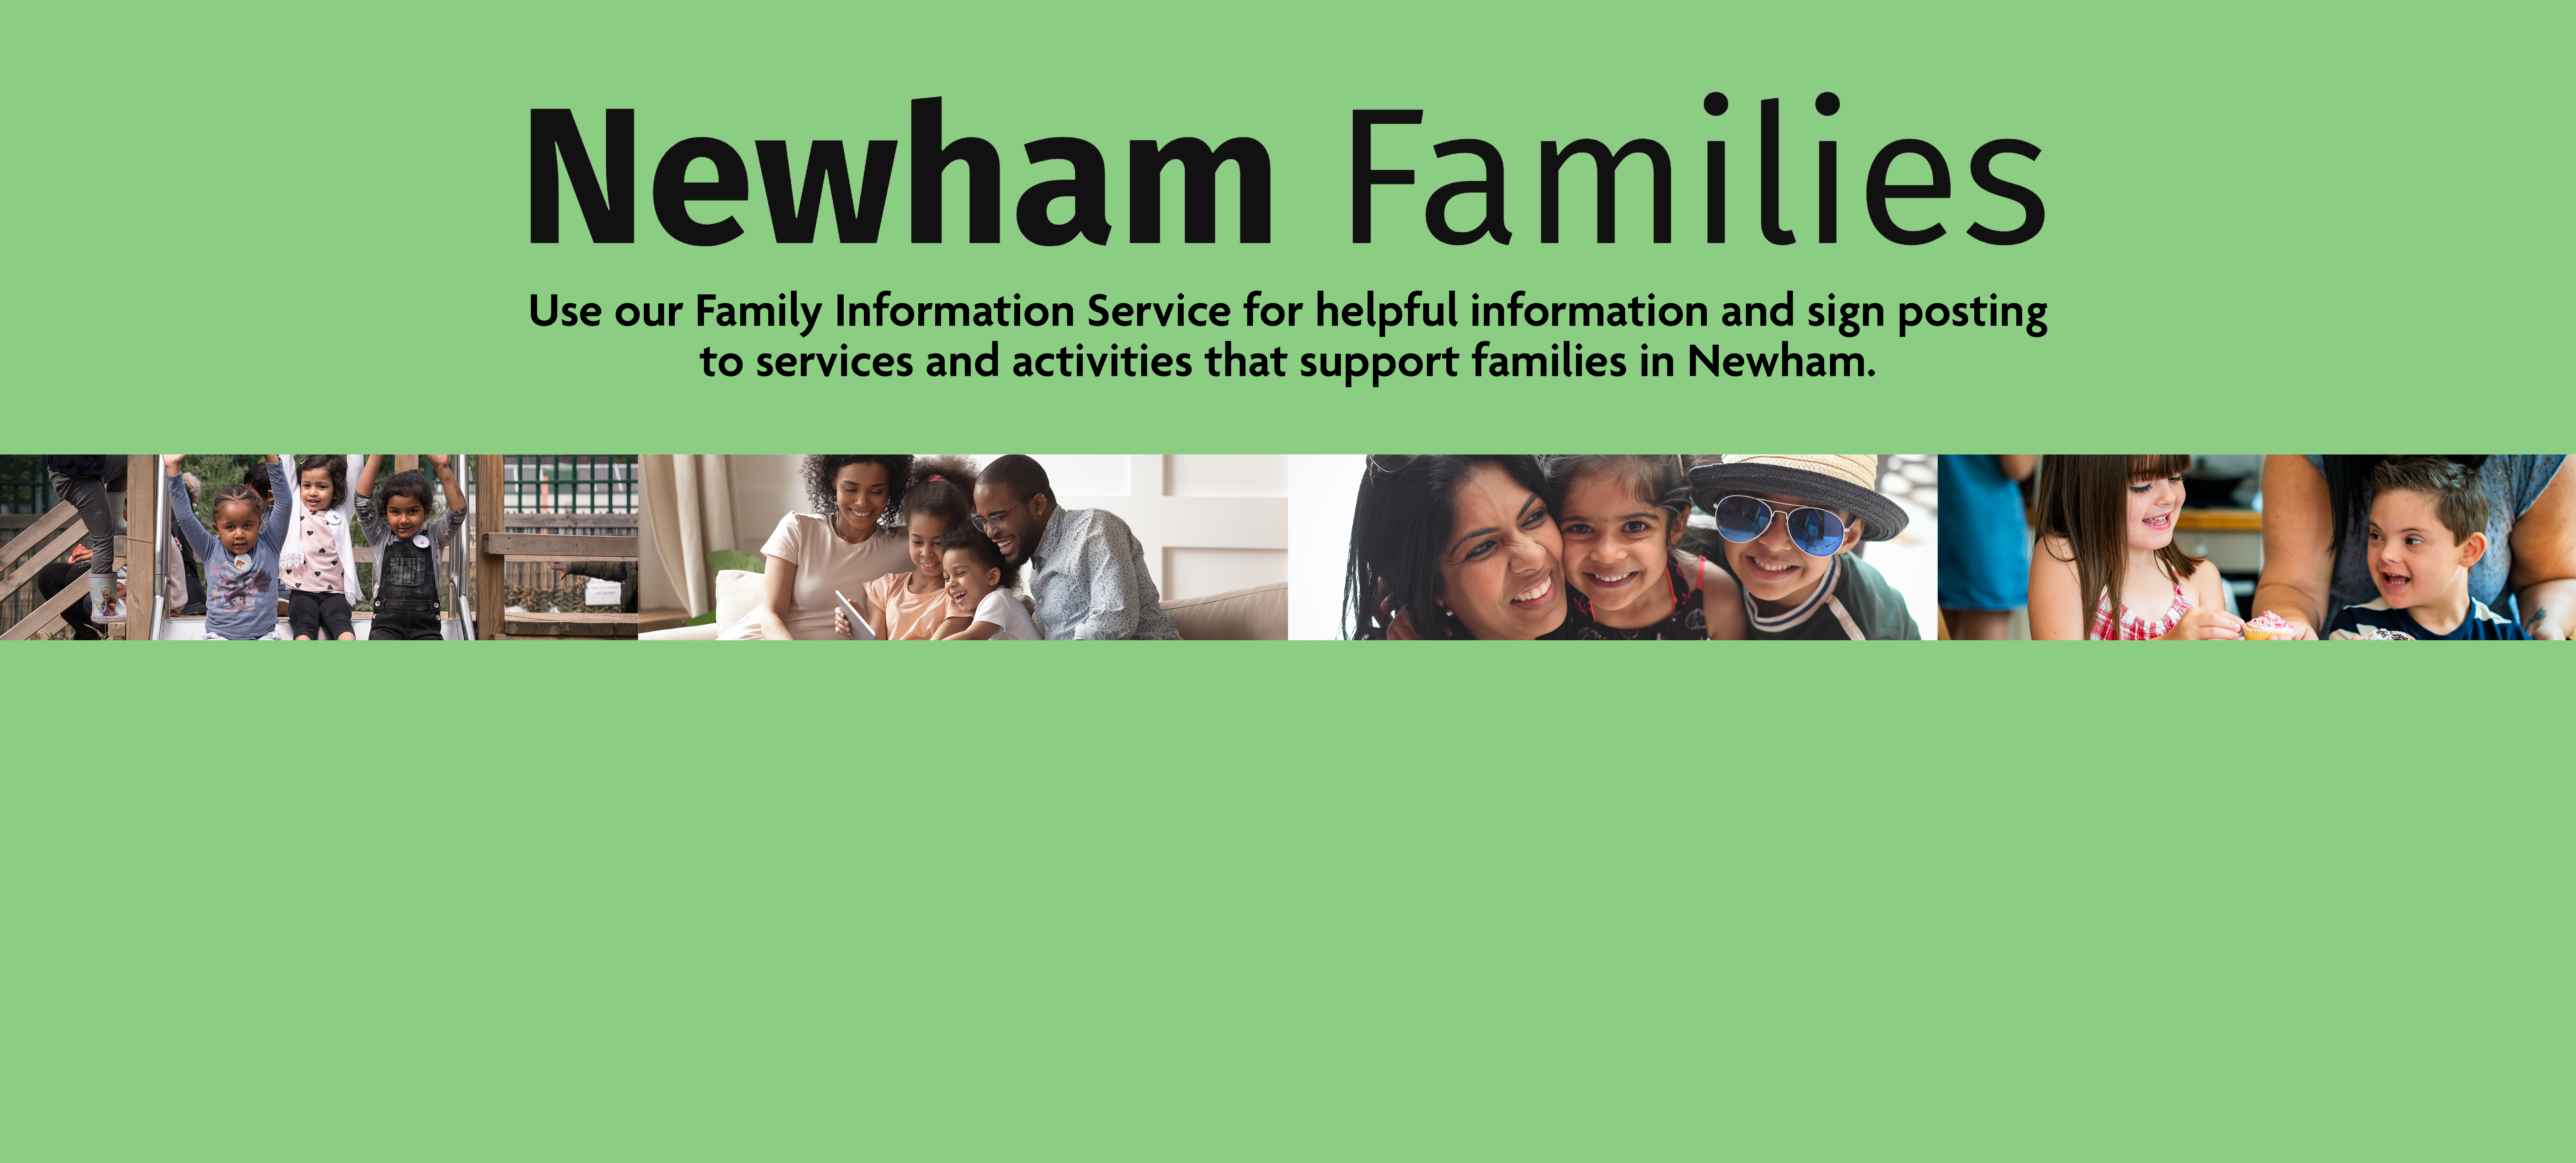 Newham families website banner2